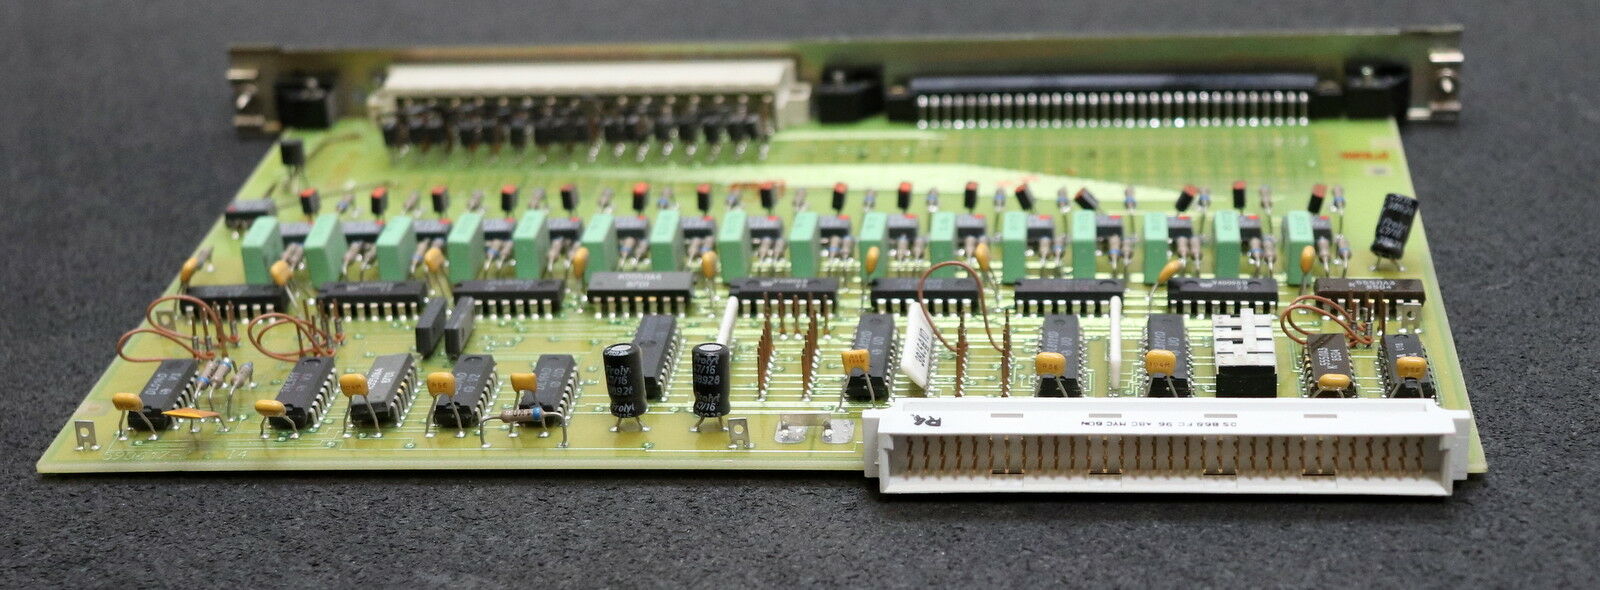 VEM NUMERIK RFT DDR Platine ED1 12 V= / 24V= 415027-0 NKM 590617-2 RFT 101561